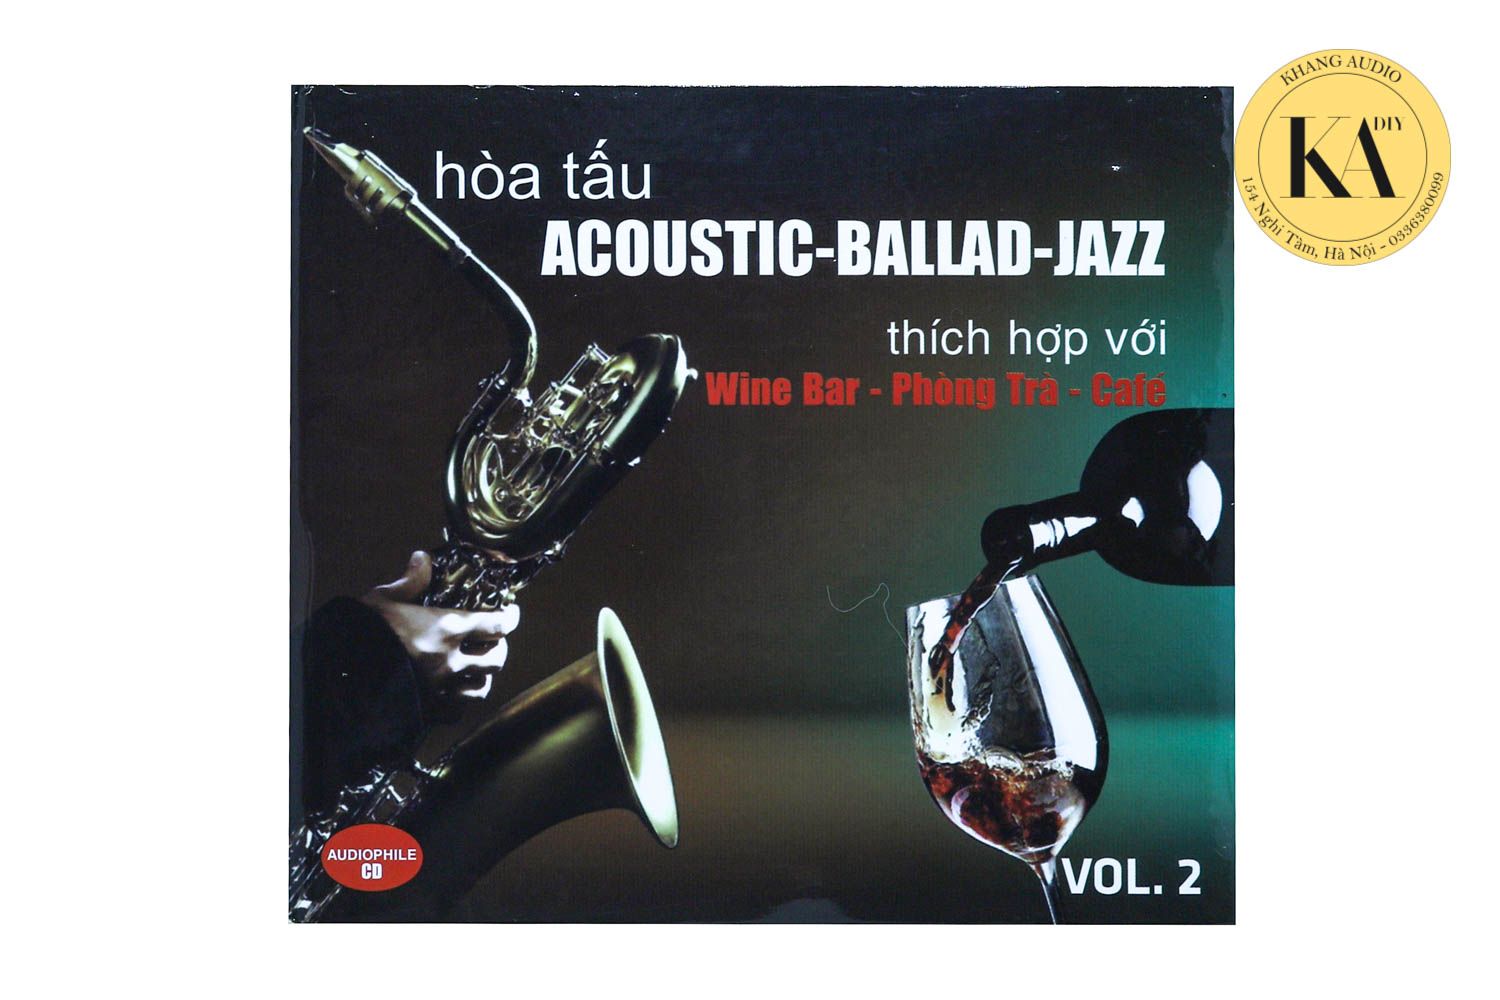 Hoà Tấu Acoustic - Ballad - Jazz Vol. 2